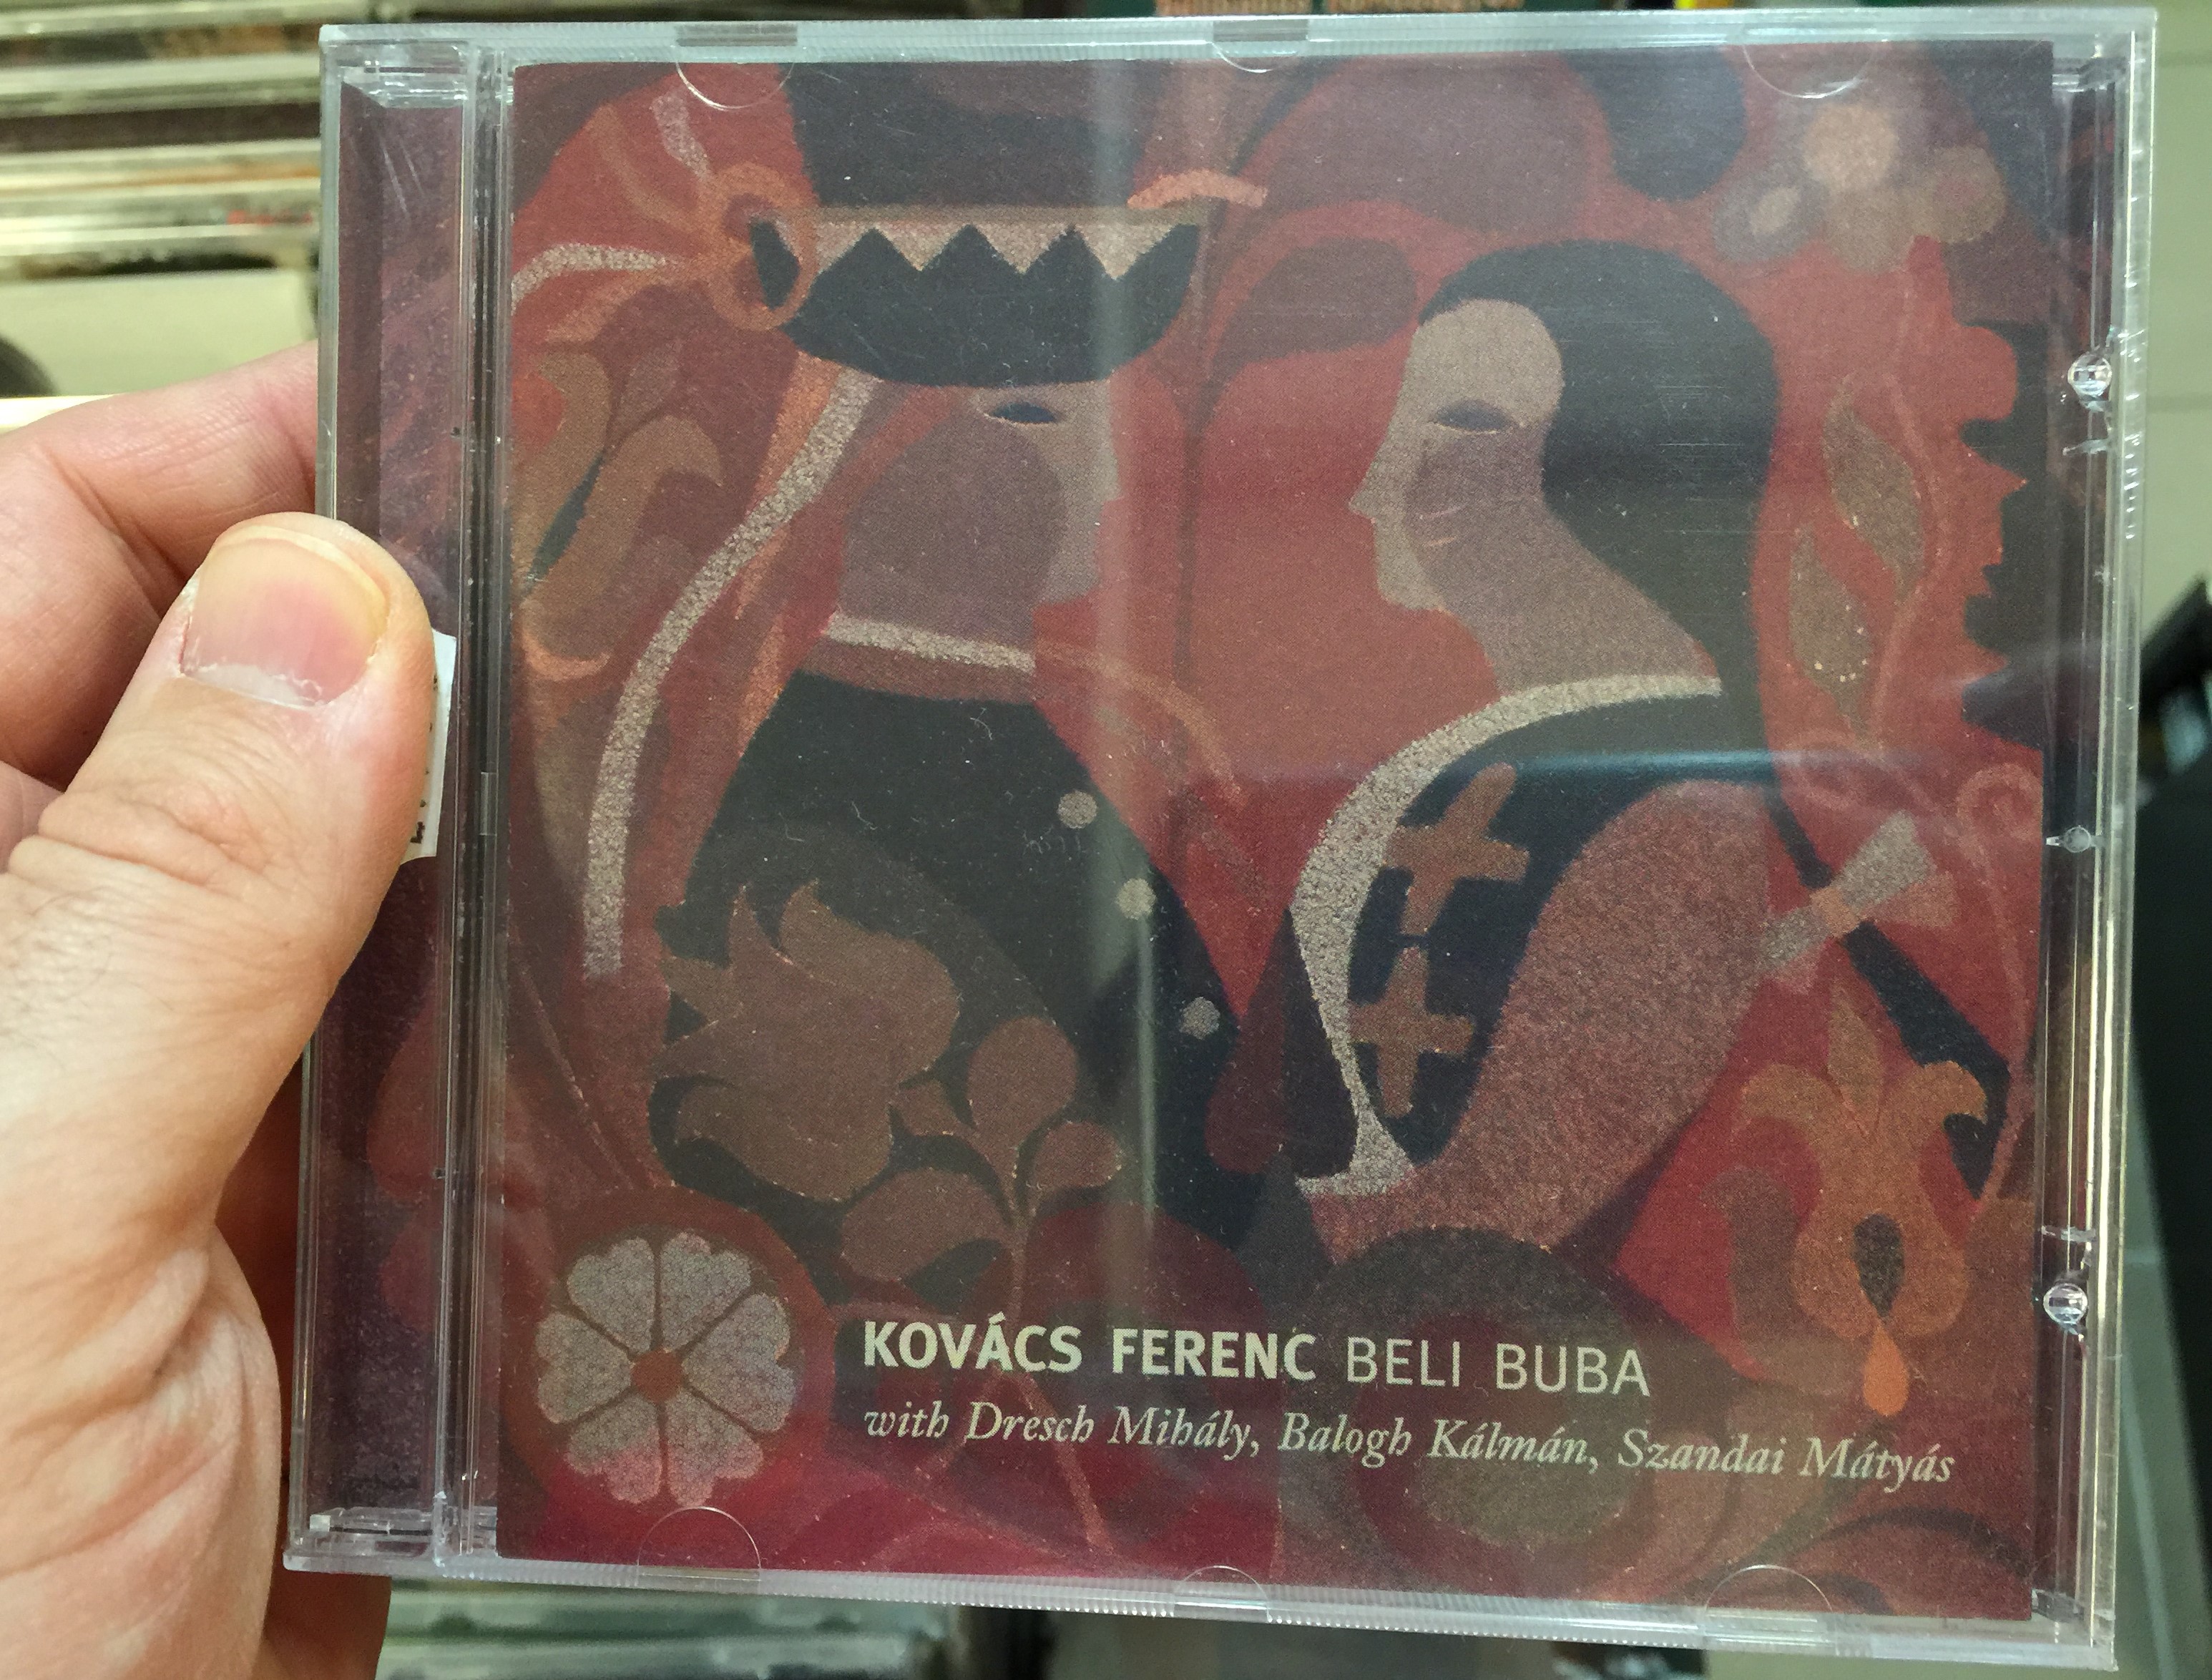 kov-cs-ferenc-beli-buba-with-dresch-mihaly-balogh-kalman-szandai-matyas-gramy-records-audio-cd-2006-gr-068-1-.jpg